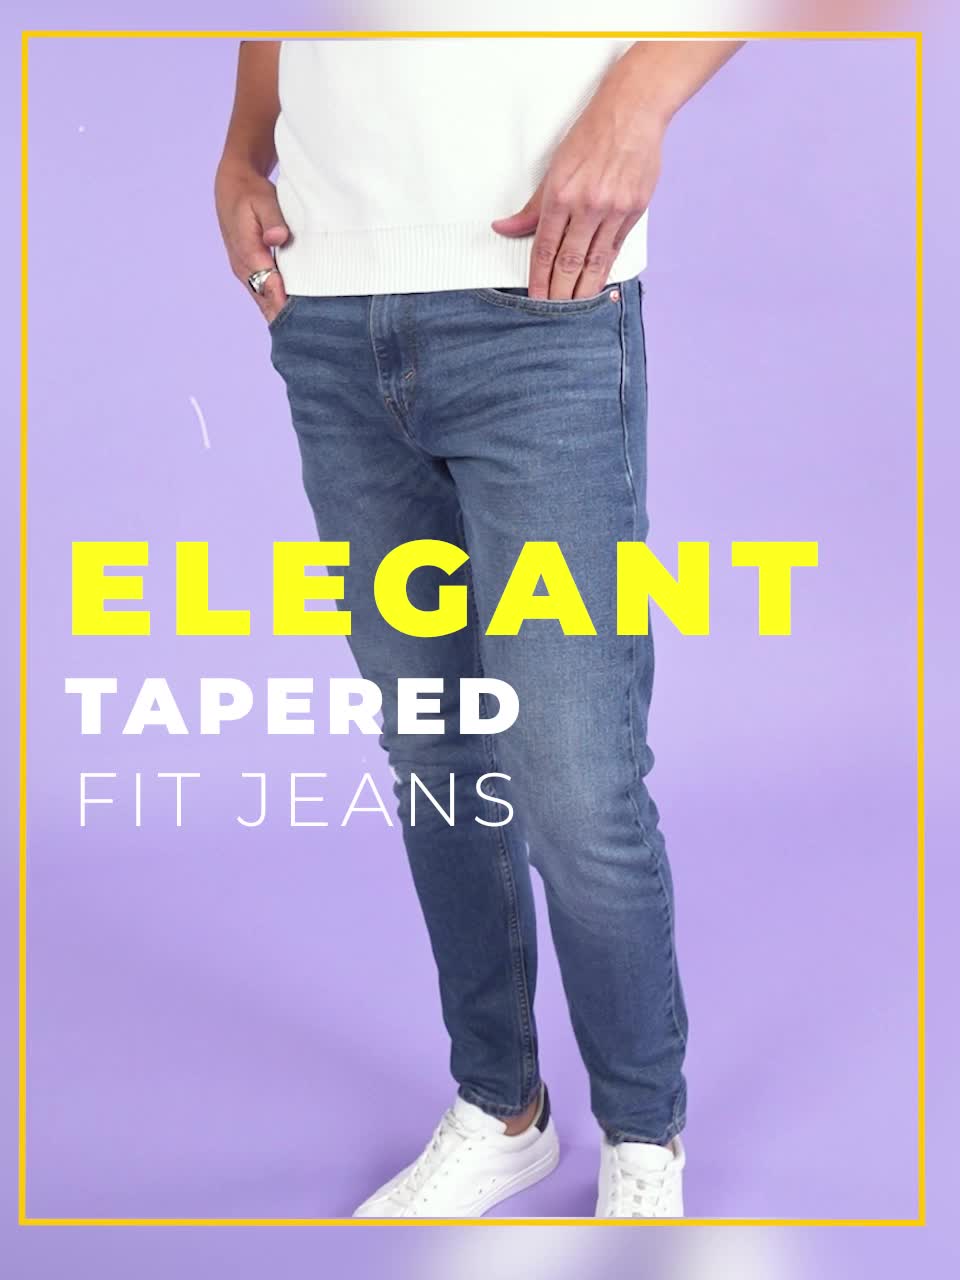 511™ Slim Fit Men's Jeans - Dark Wash